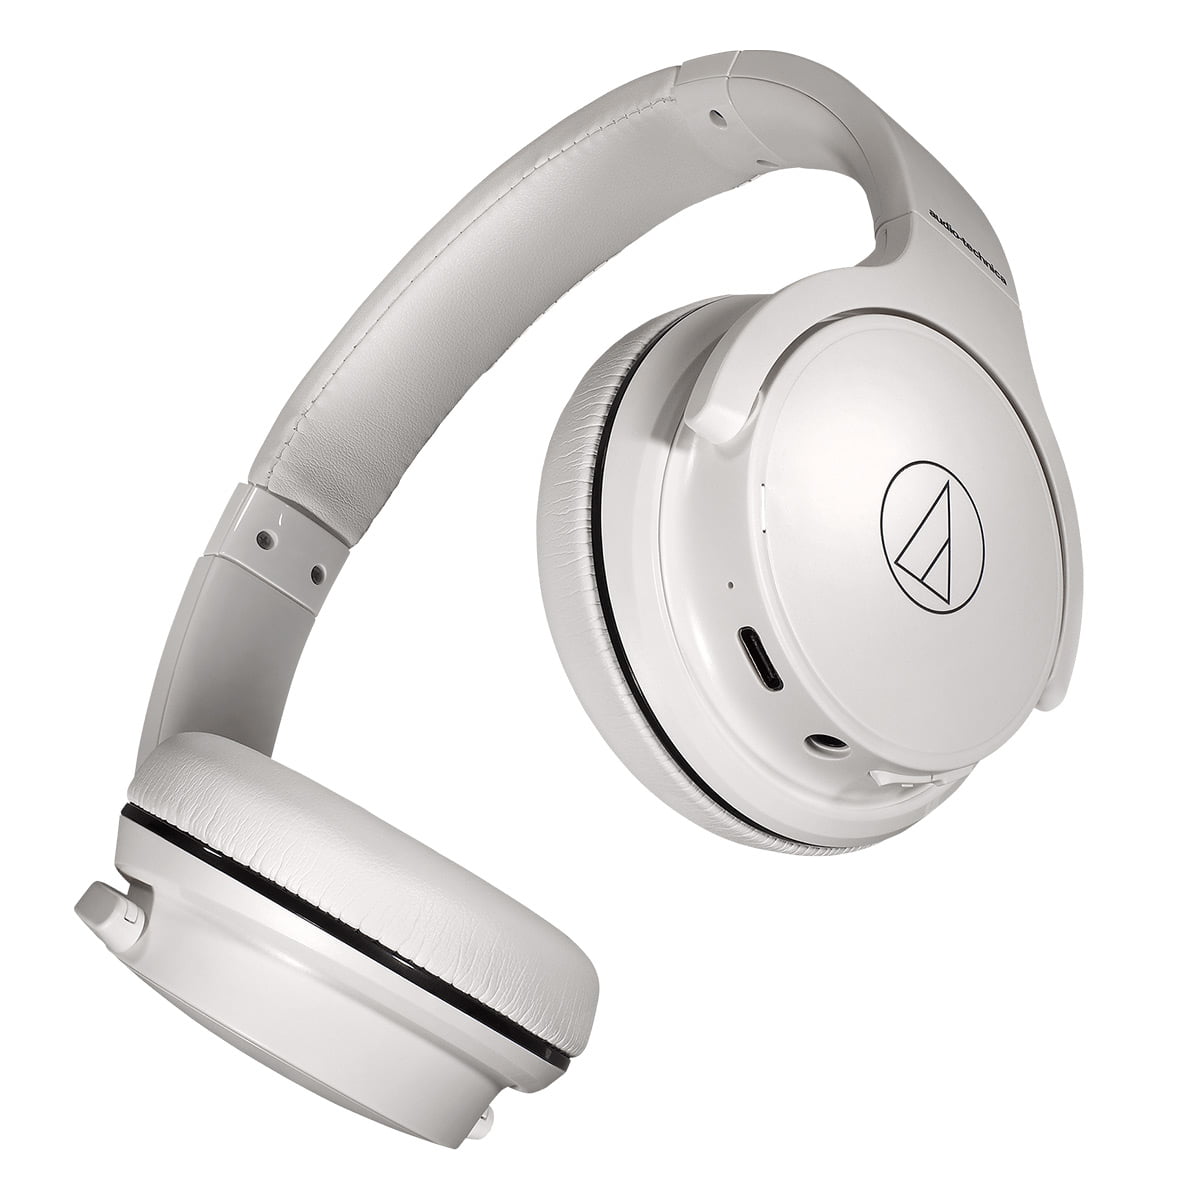 AudioTechnica ATH-S220BT Wireless On-Ear Headphones (Beige